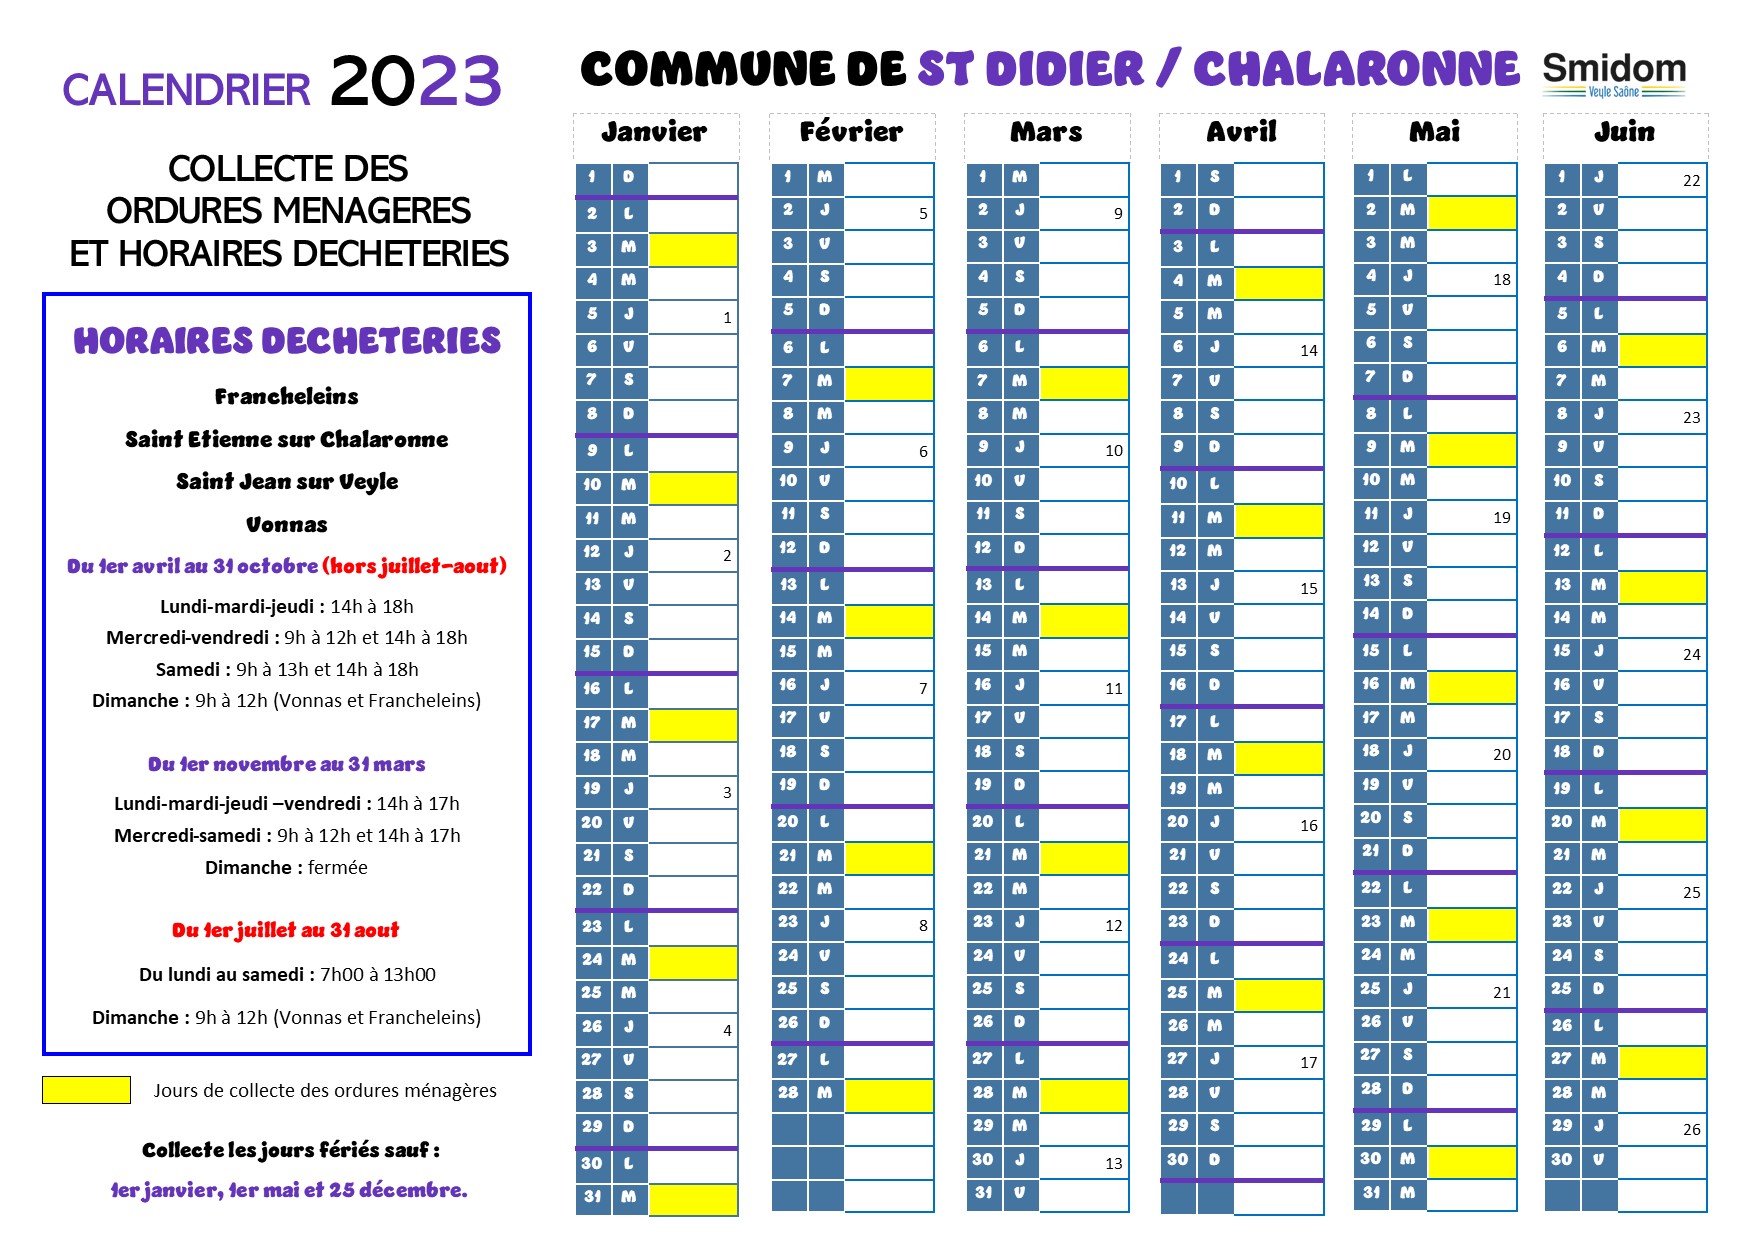 Saint Didier sur Chalaronne Calendrier 2023.jpg